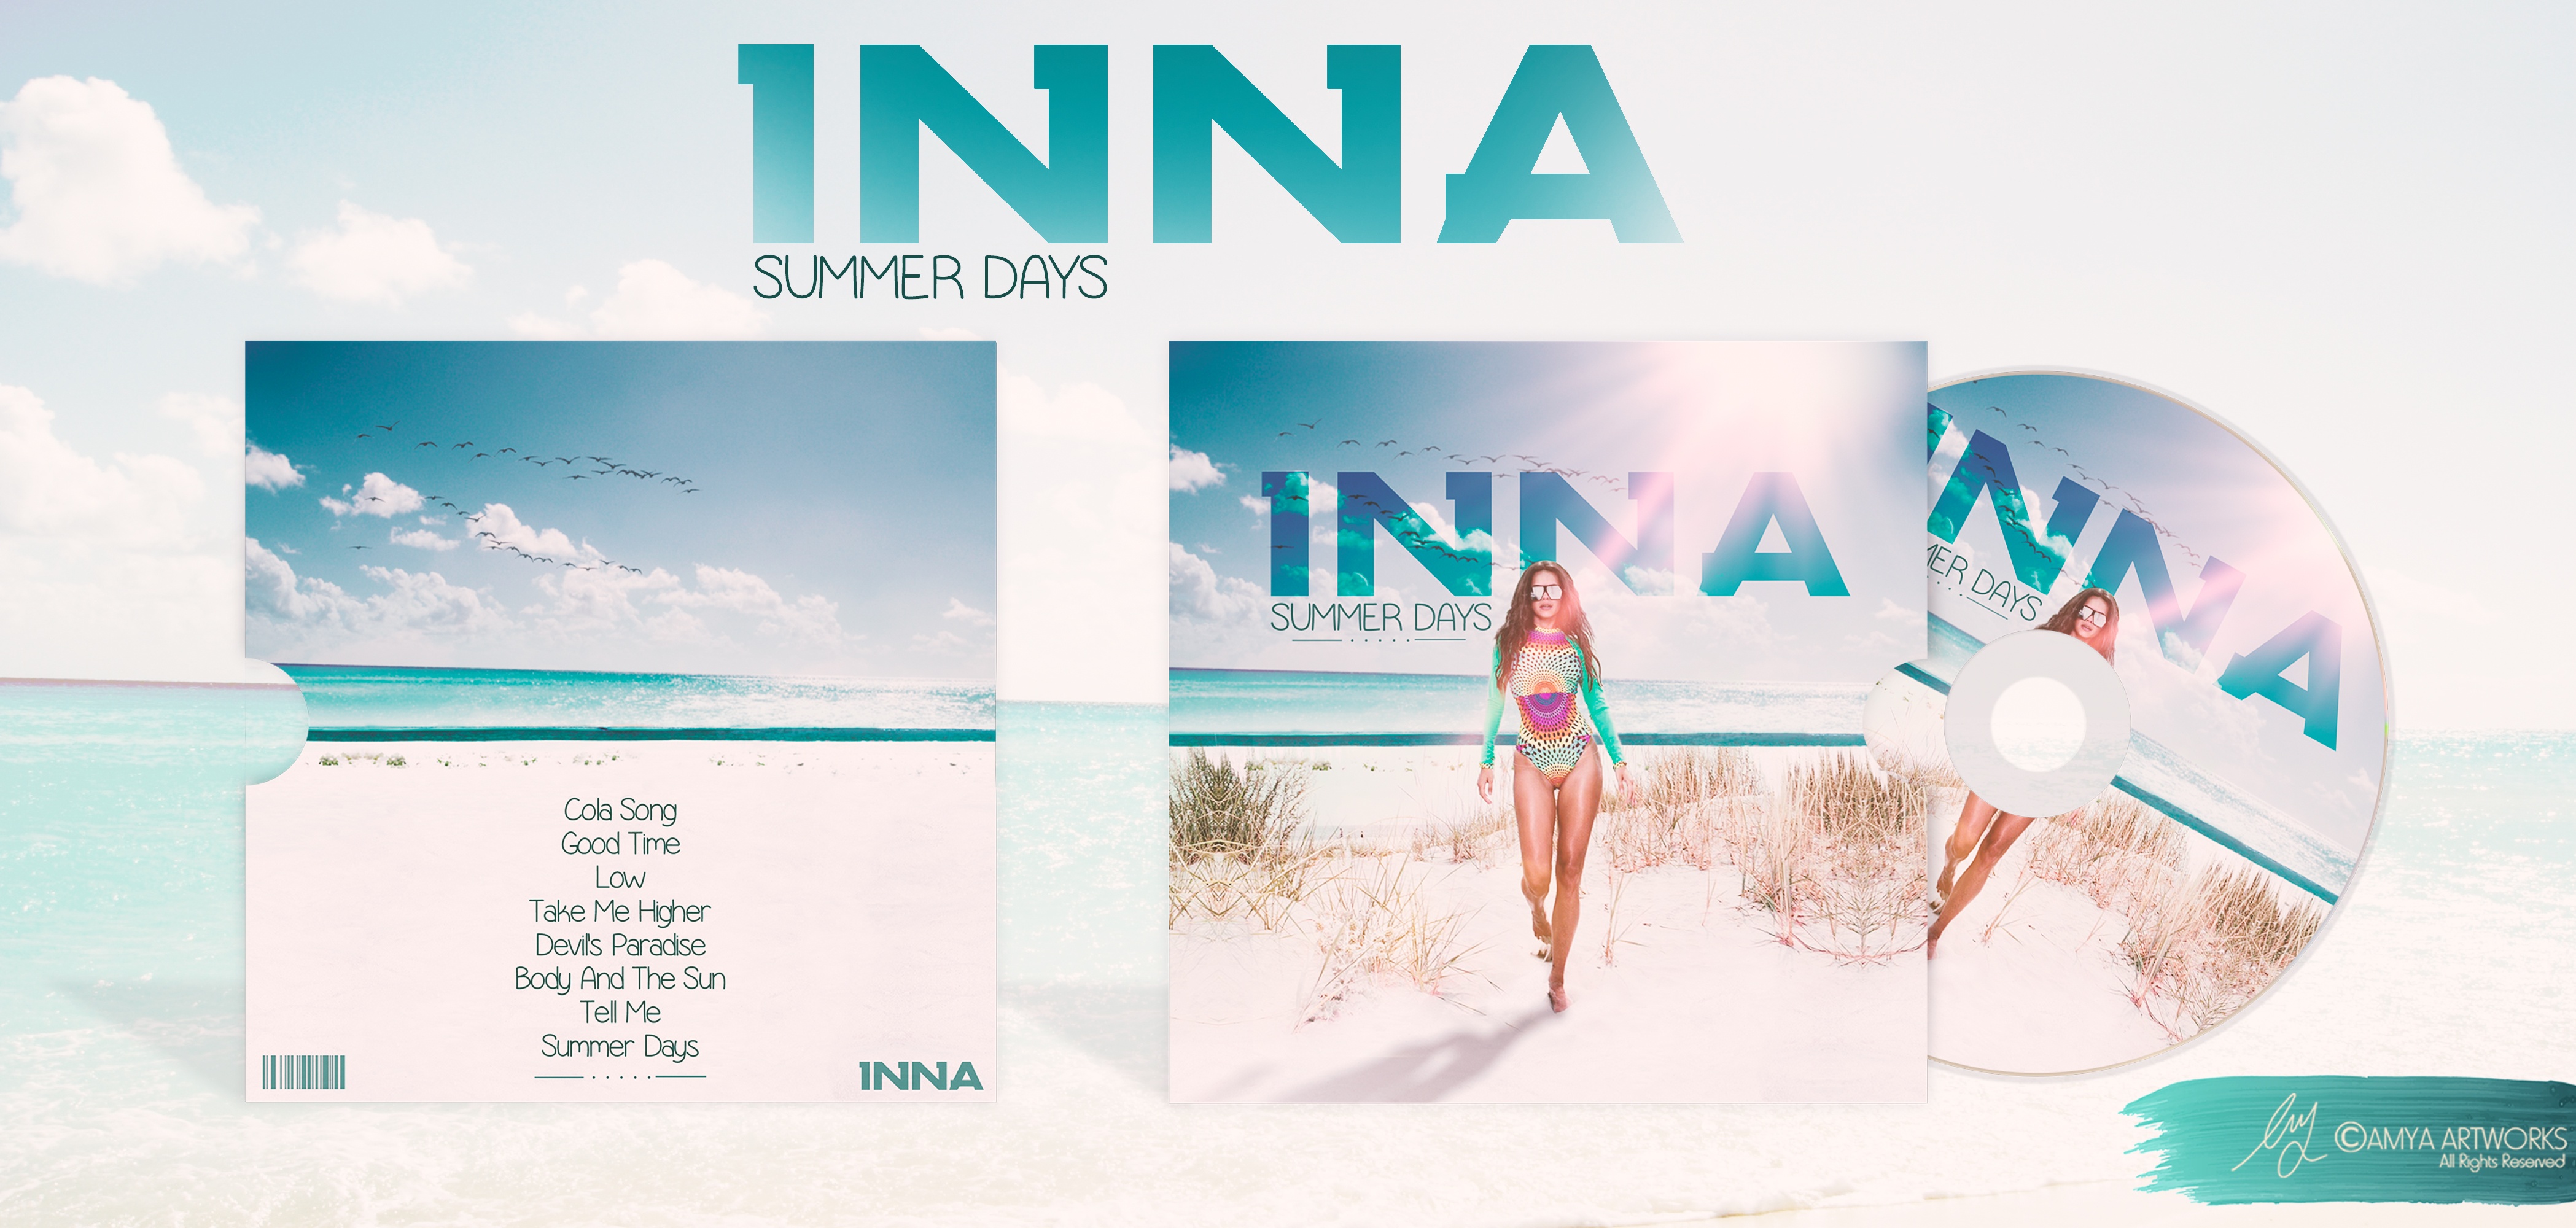 INNA-SUMMER DAYS box cover